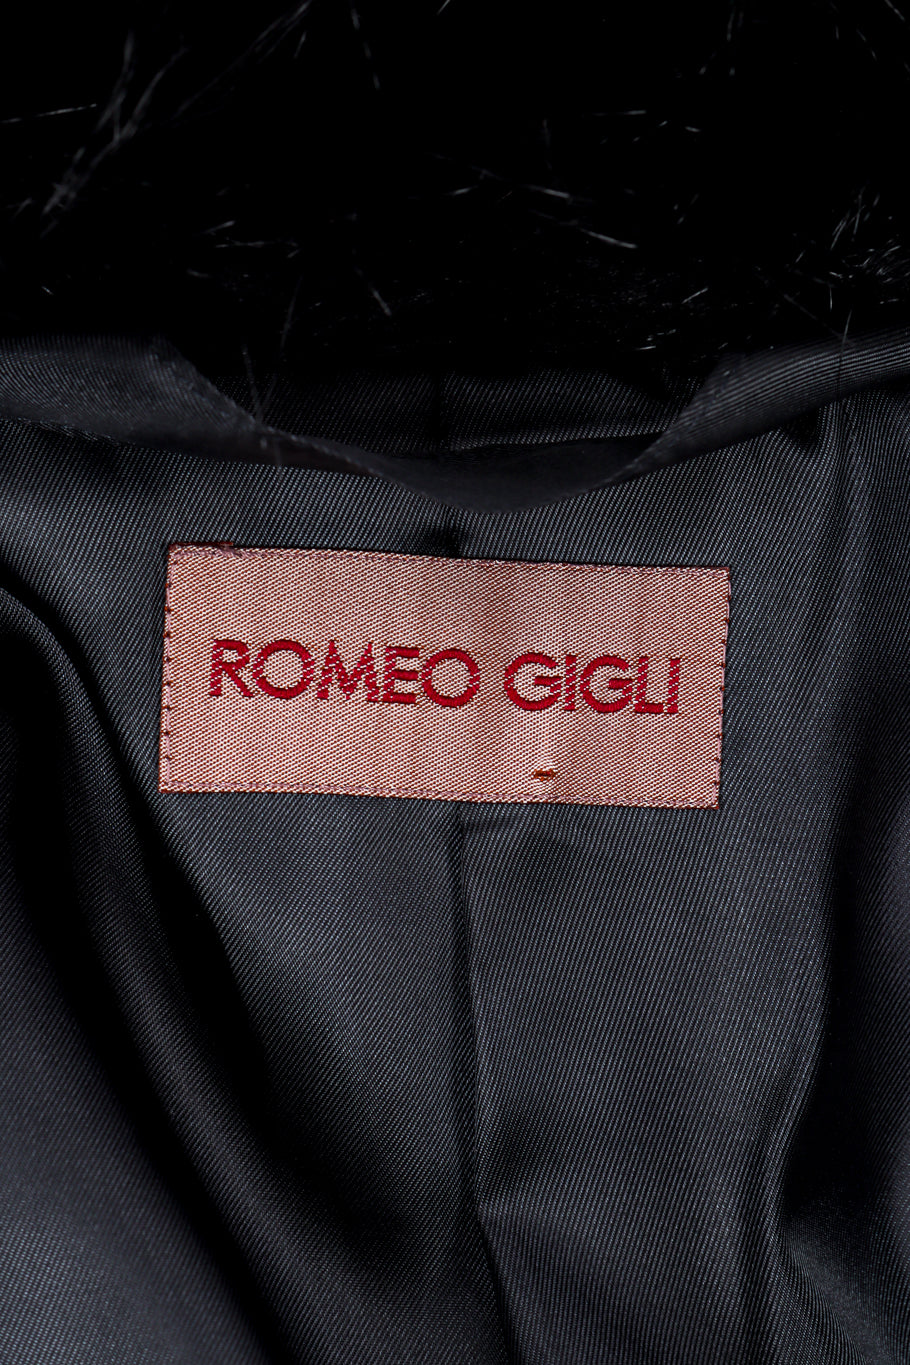 Vintage Romeo Gigli Faux Fur Coat signature label @recessla